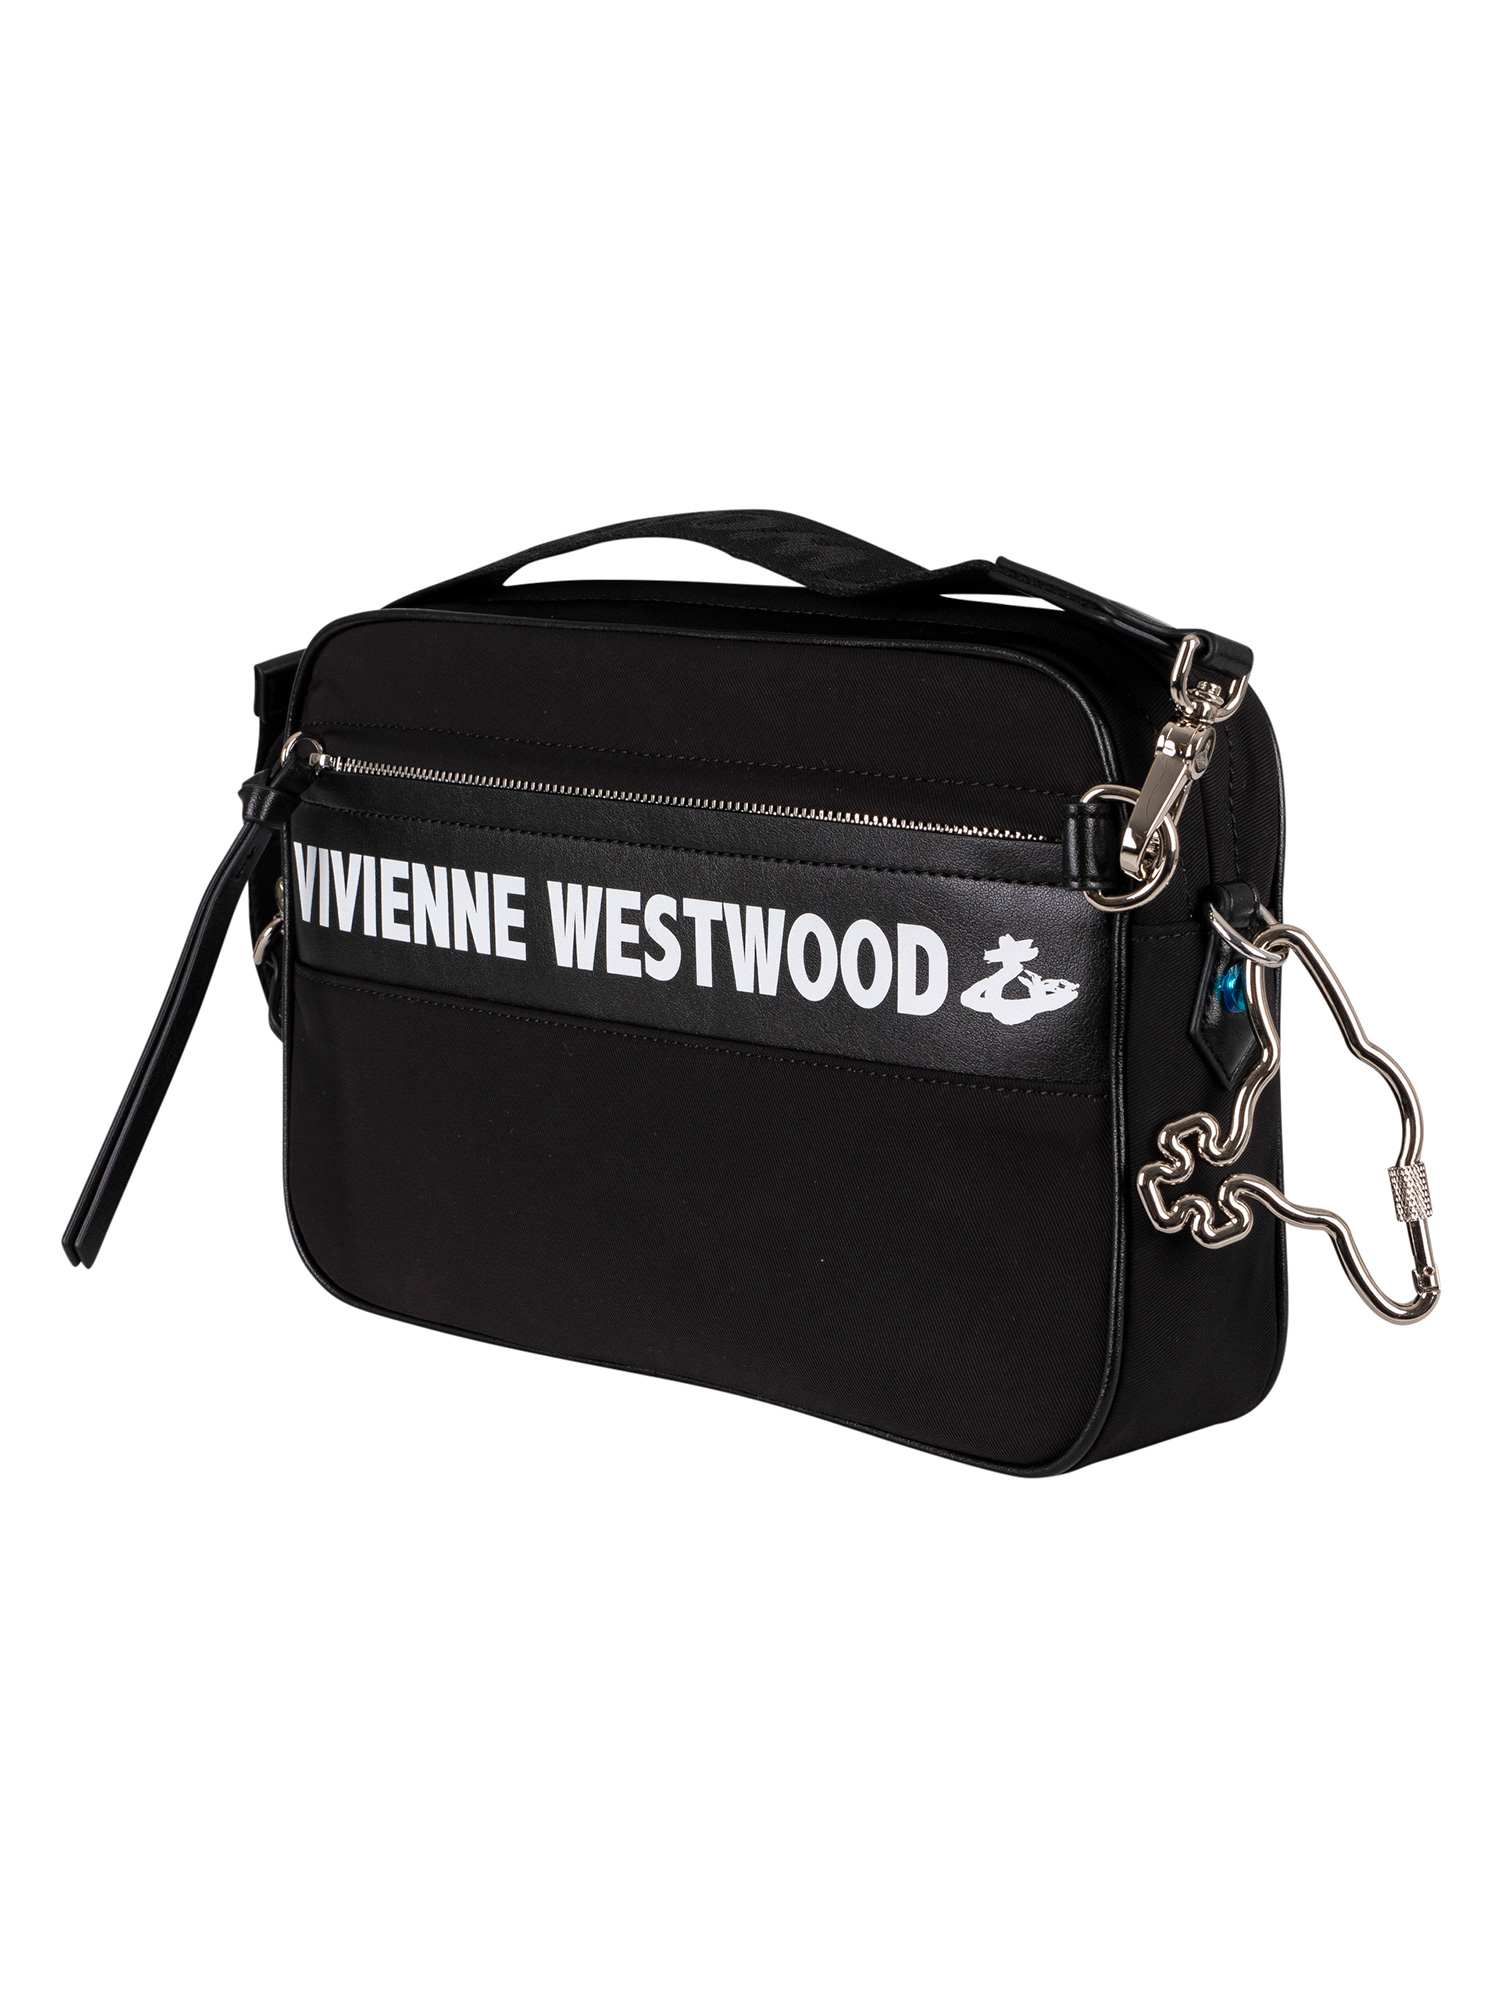 Vivienne Westwood Lisa Large Camera Bag - Black